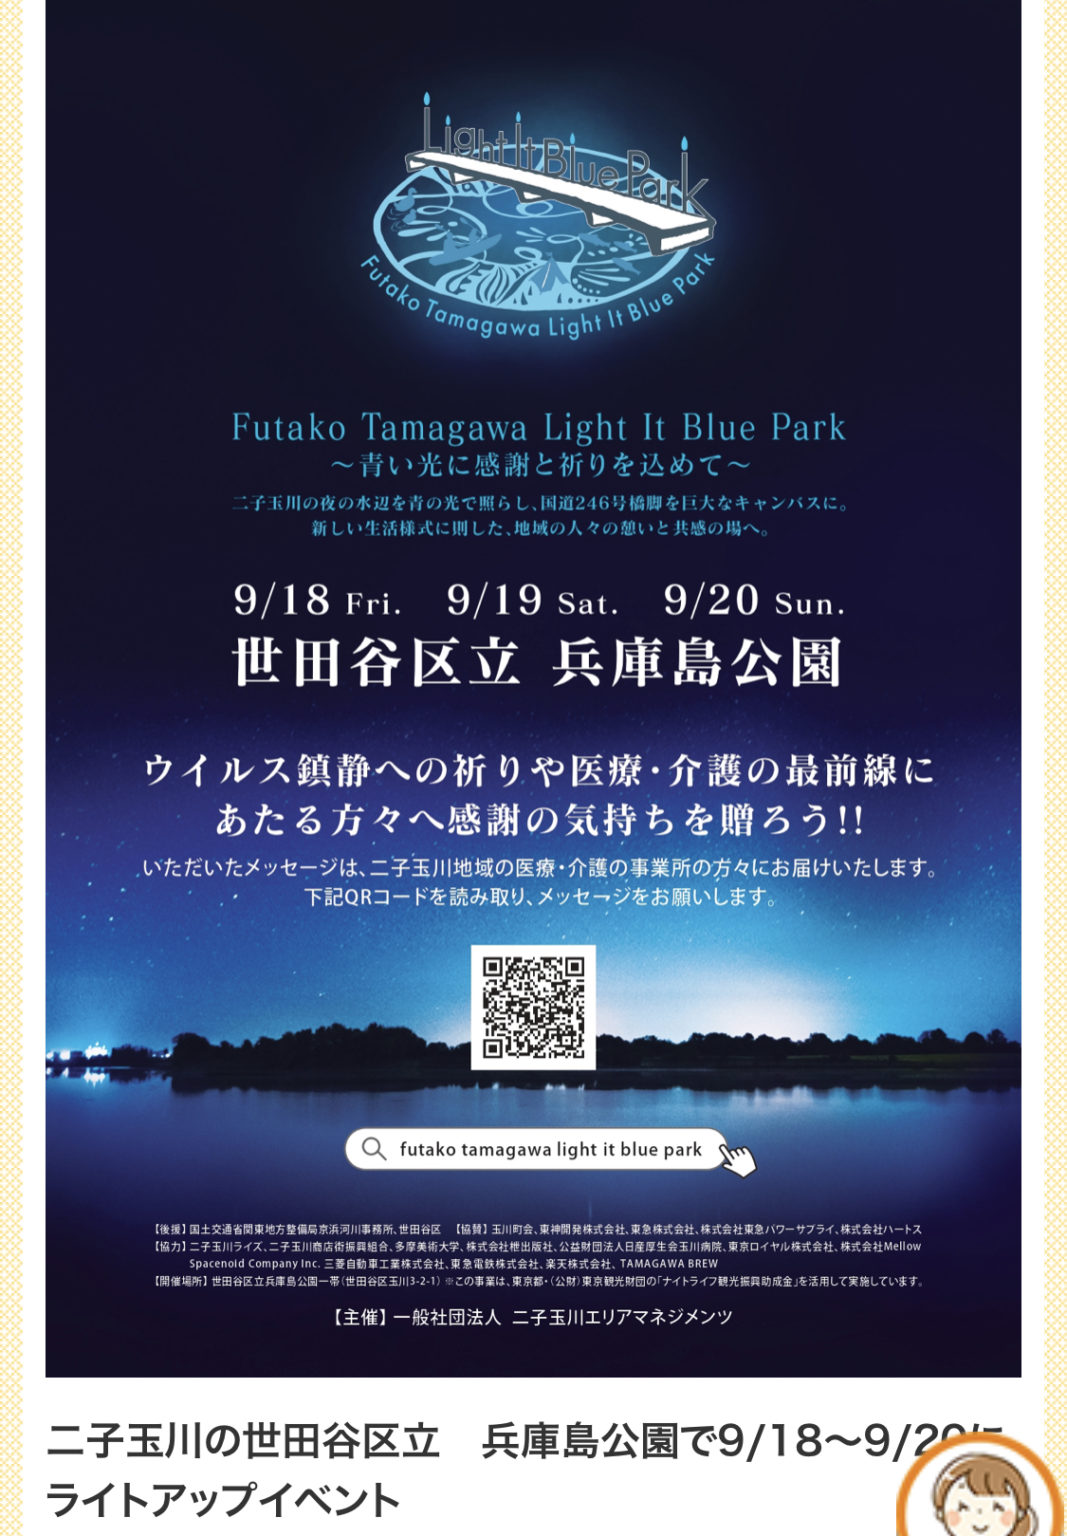 Futako Tamagawa Light it Blue Park